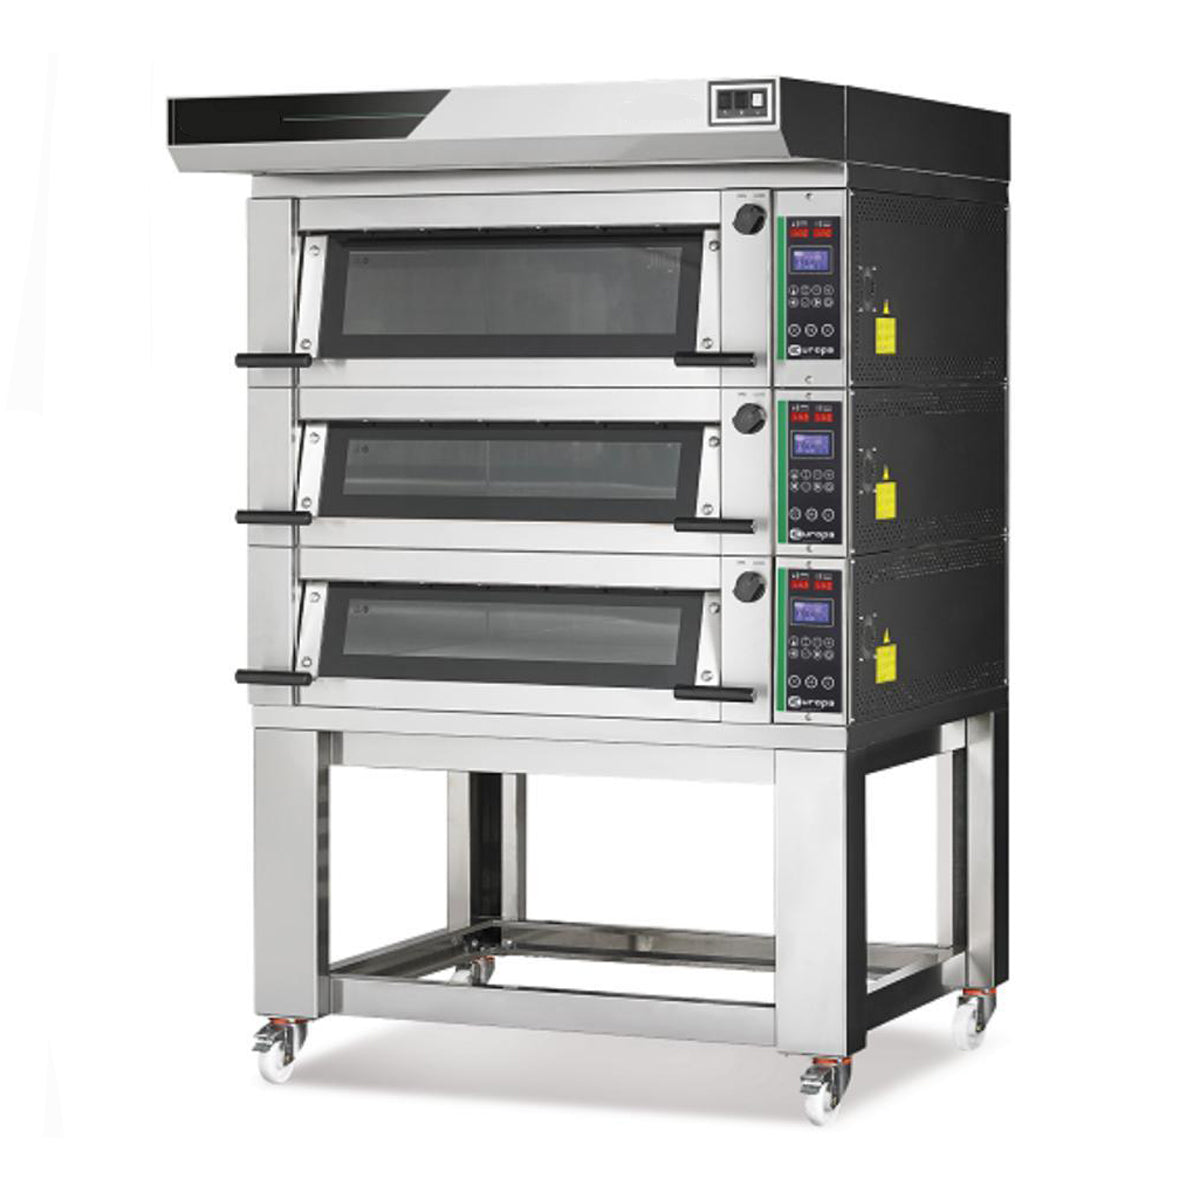 Premium pastry shop ovens for professionals